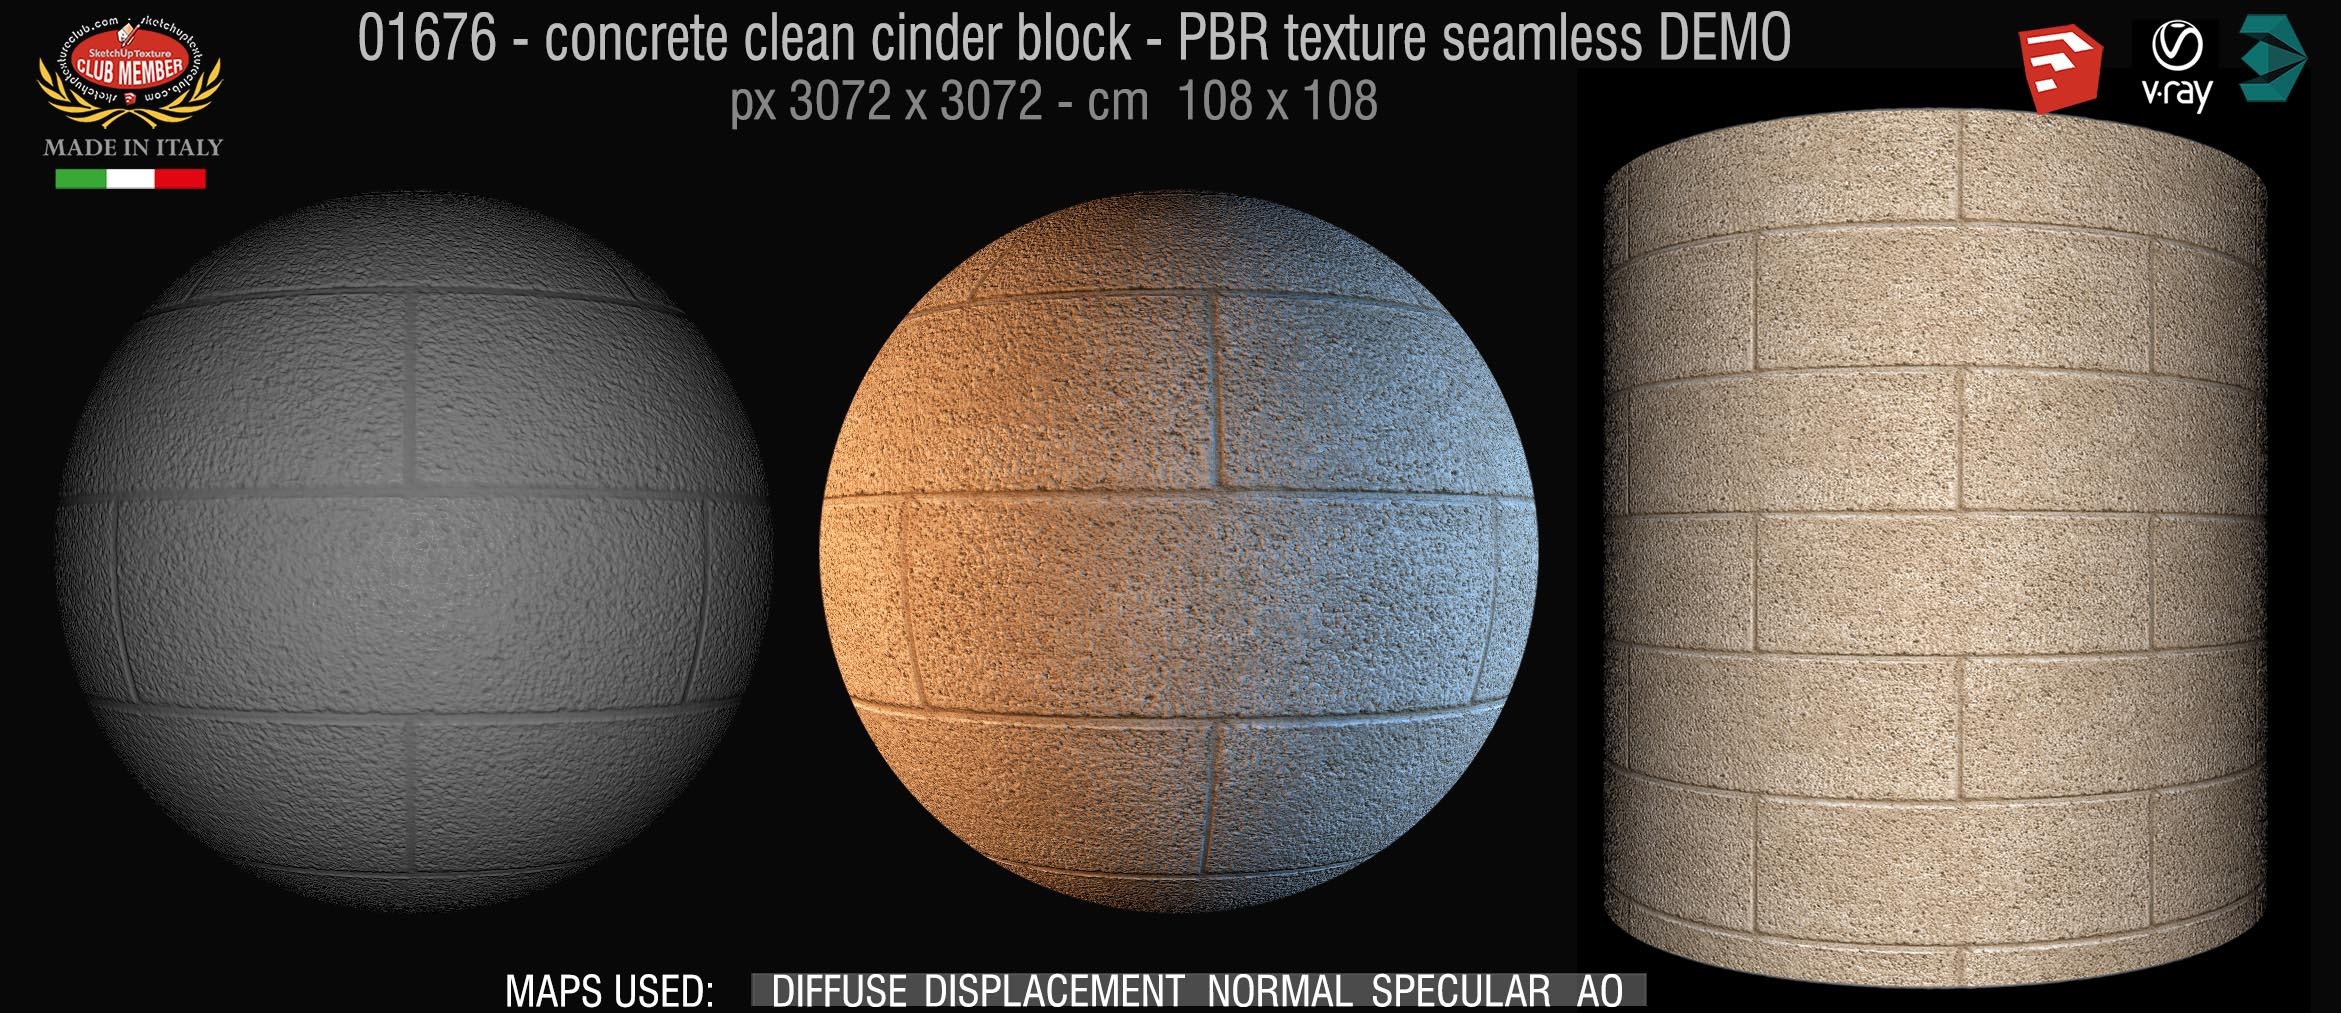 01676 concrete clean cinder block PBR texture seamless DEMO